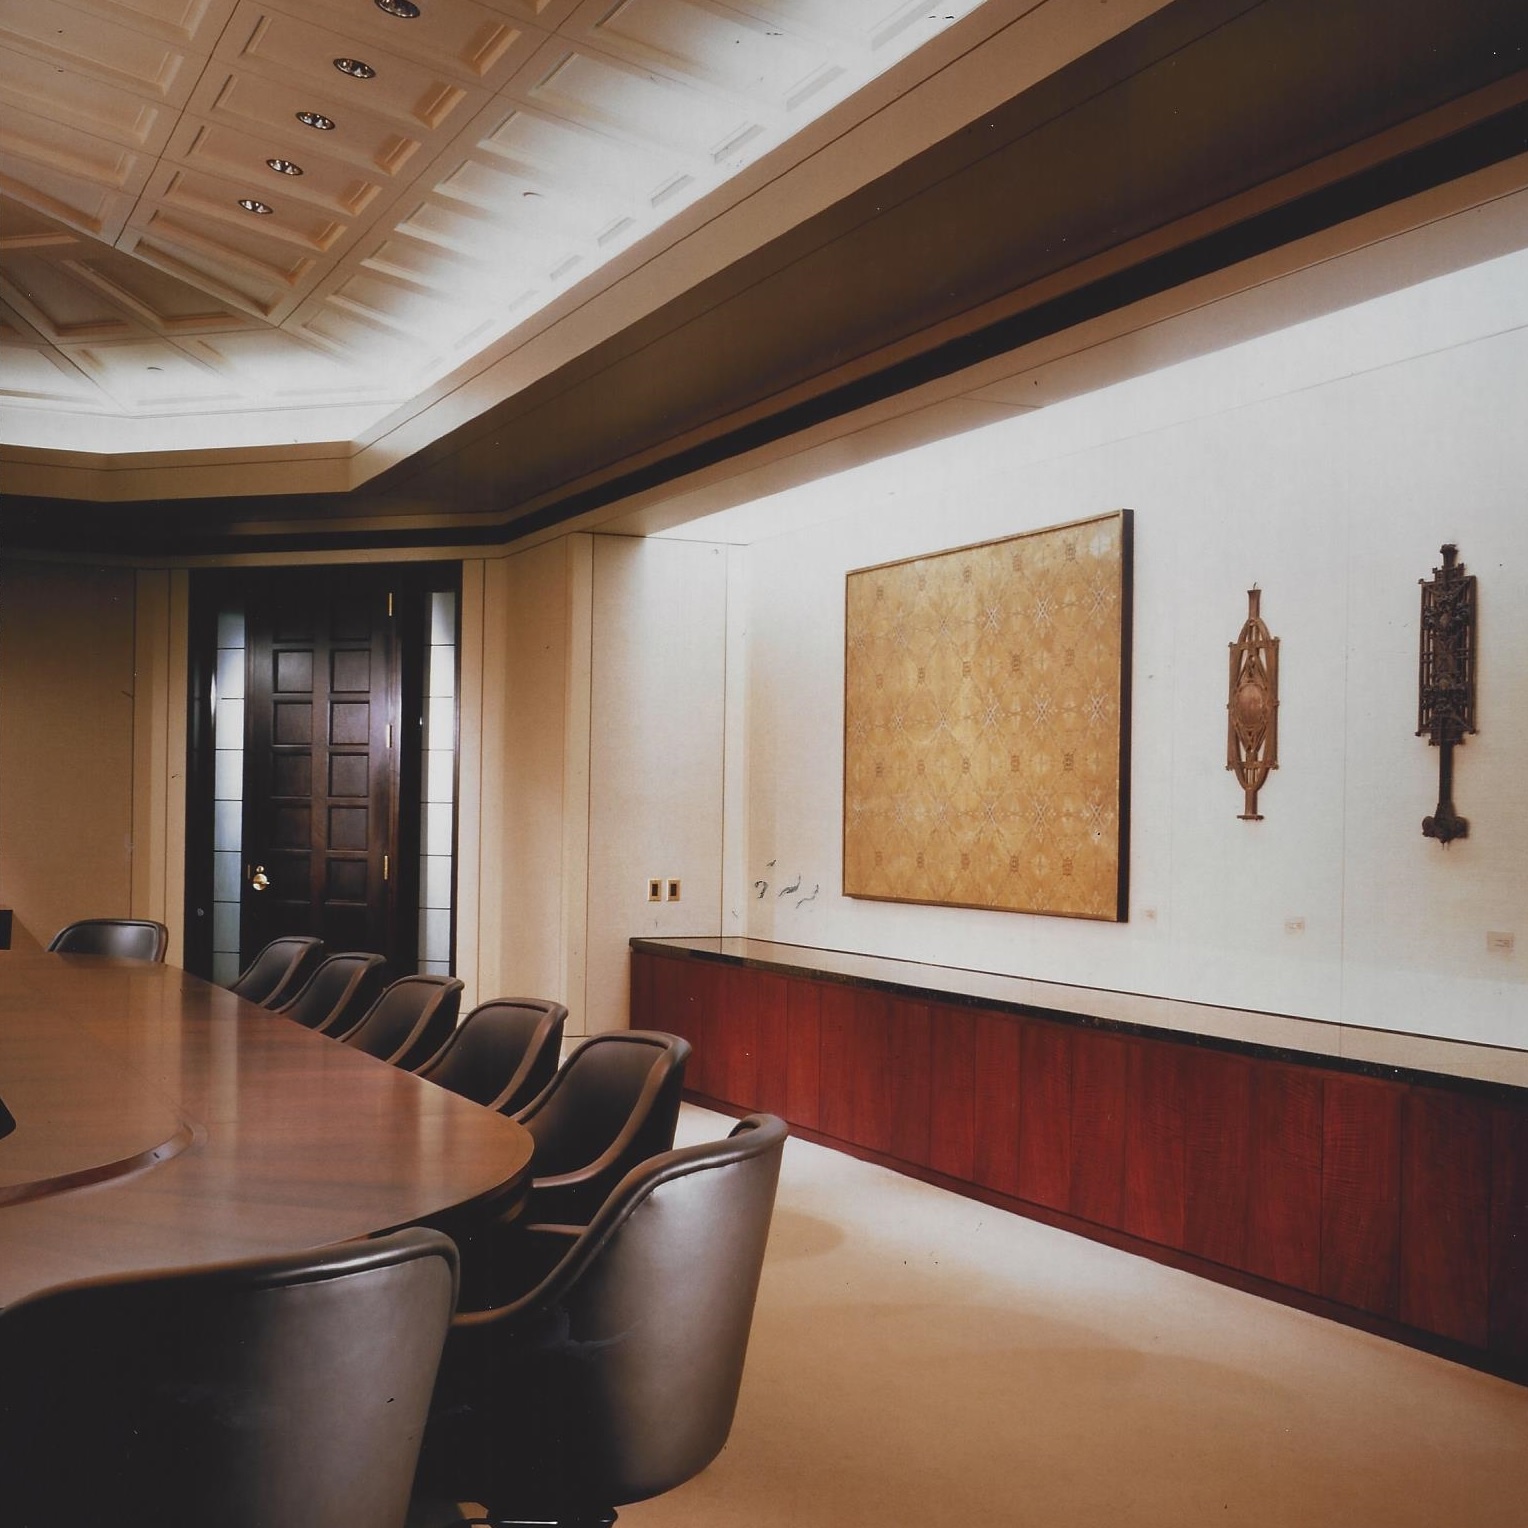 Conference room interior design at American General